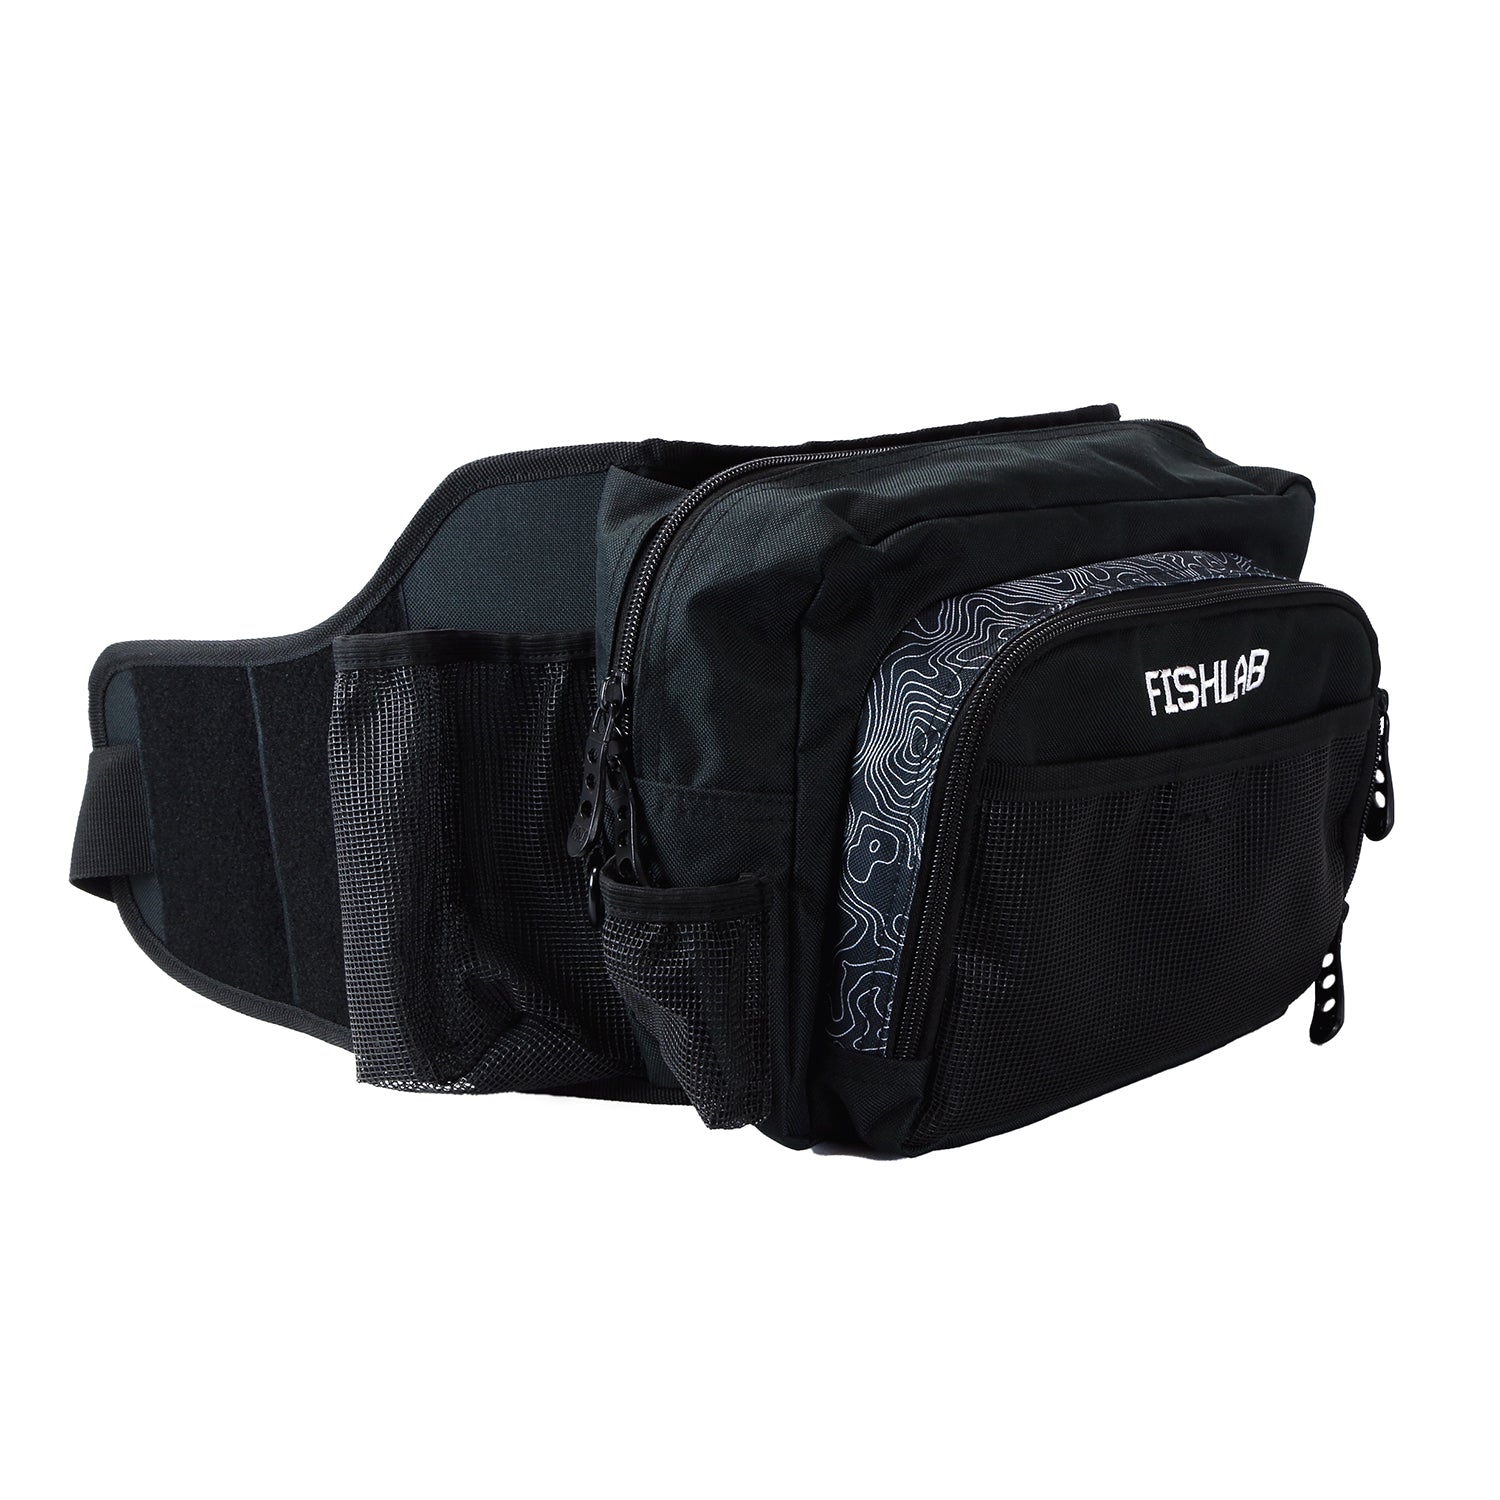 Fishlab Tackle Backpack - Black